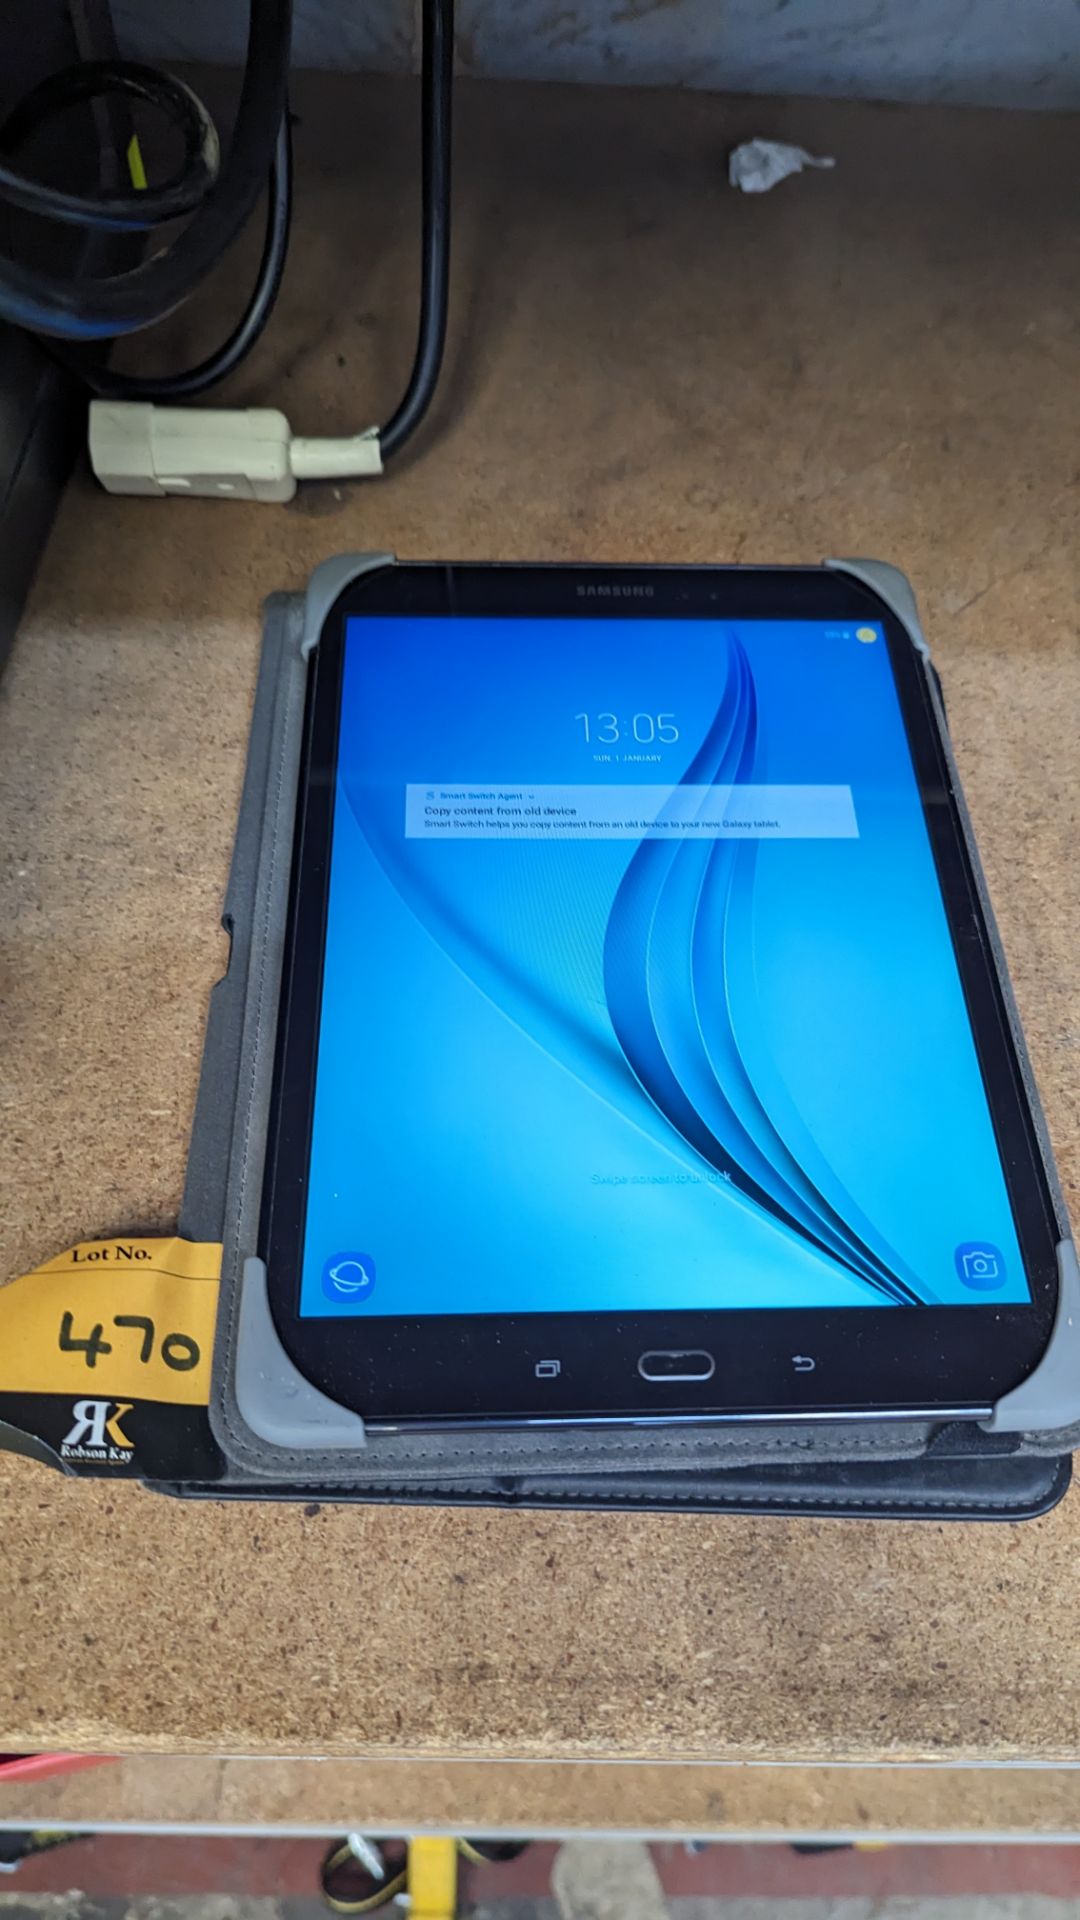 Samsung Galaxy tablet - Image 5 of 8